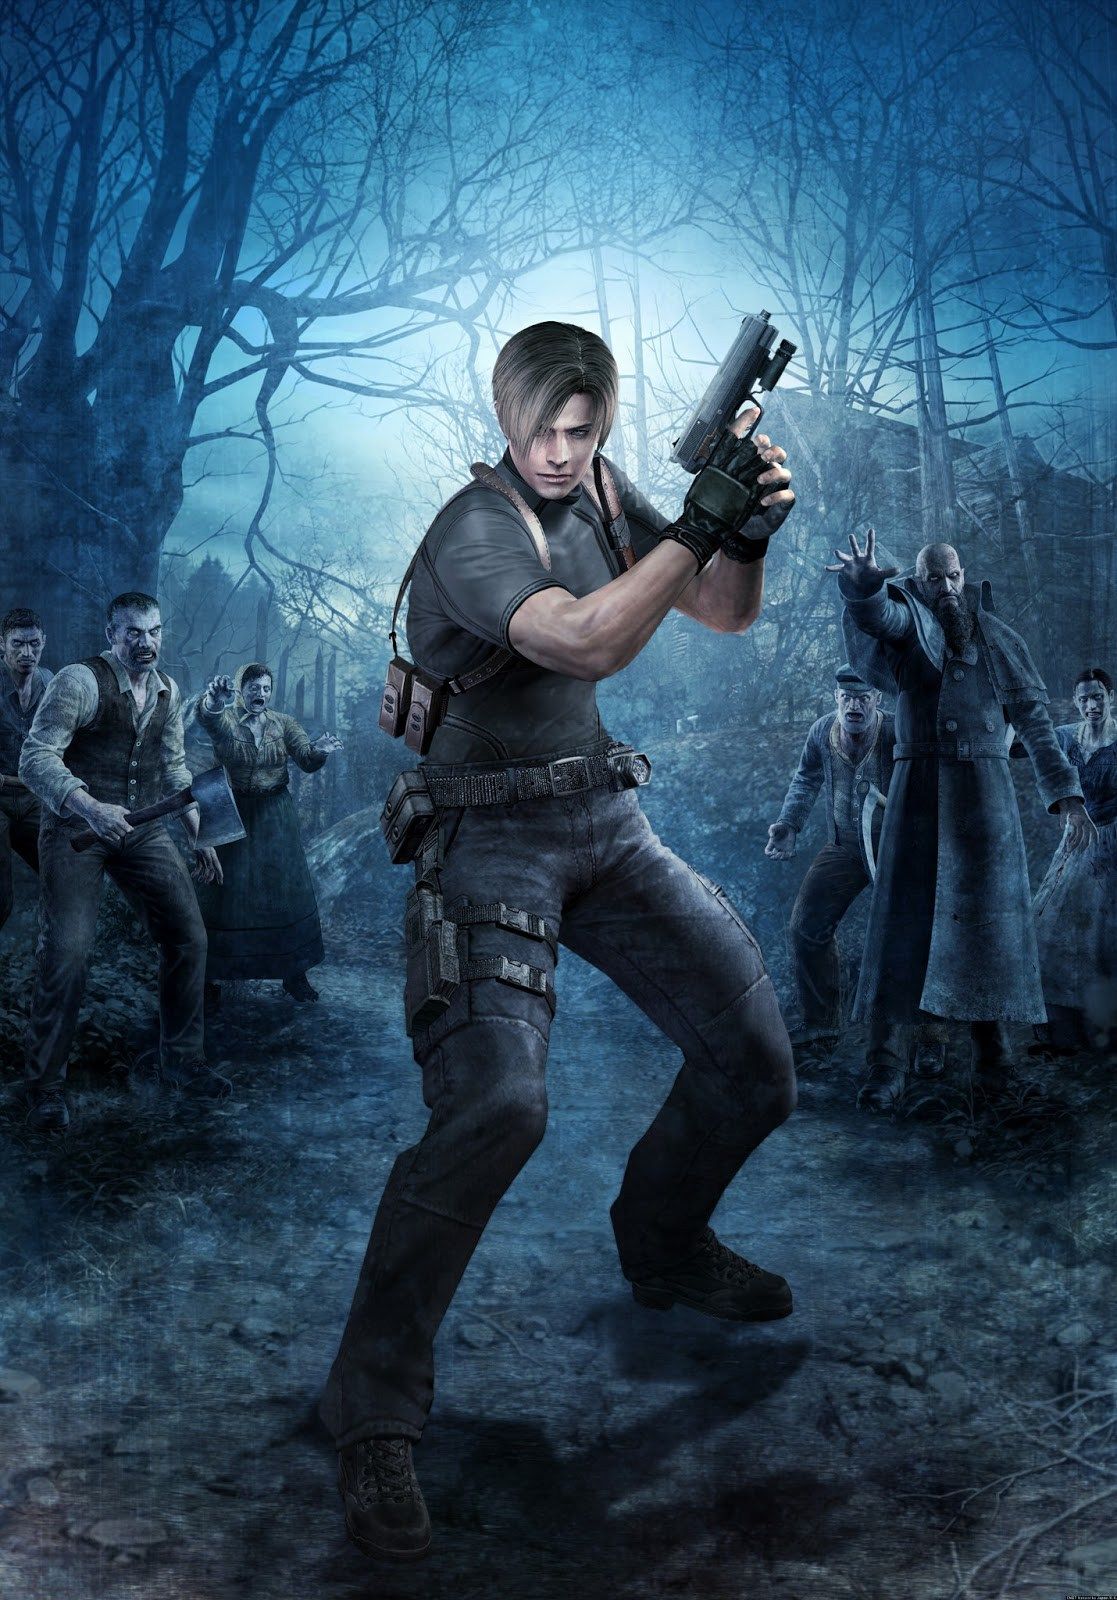 Resident Evil 4 iPhone Wallpaper Free Resident Evil 4 iPhone Background